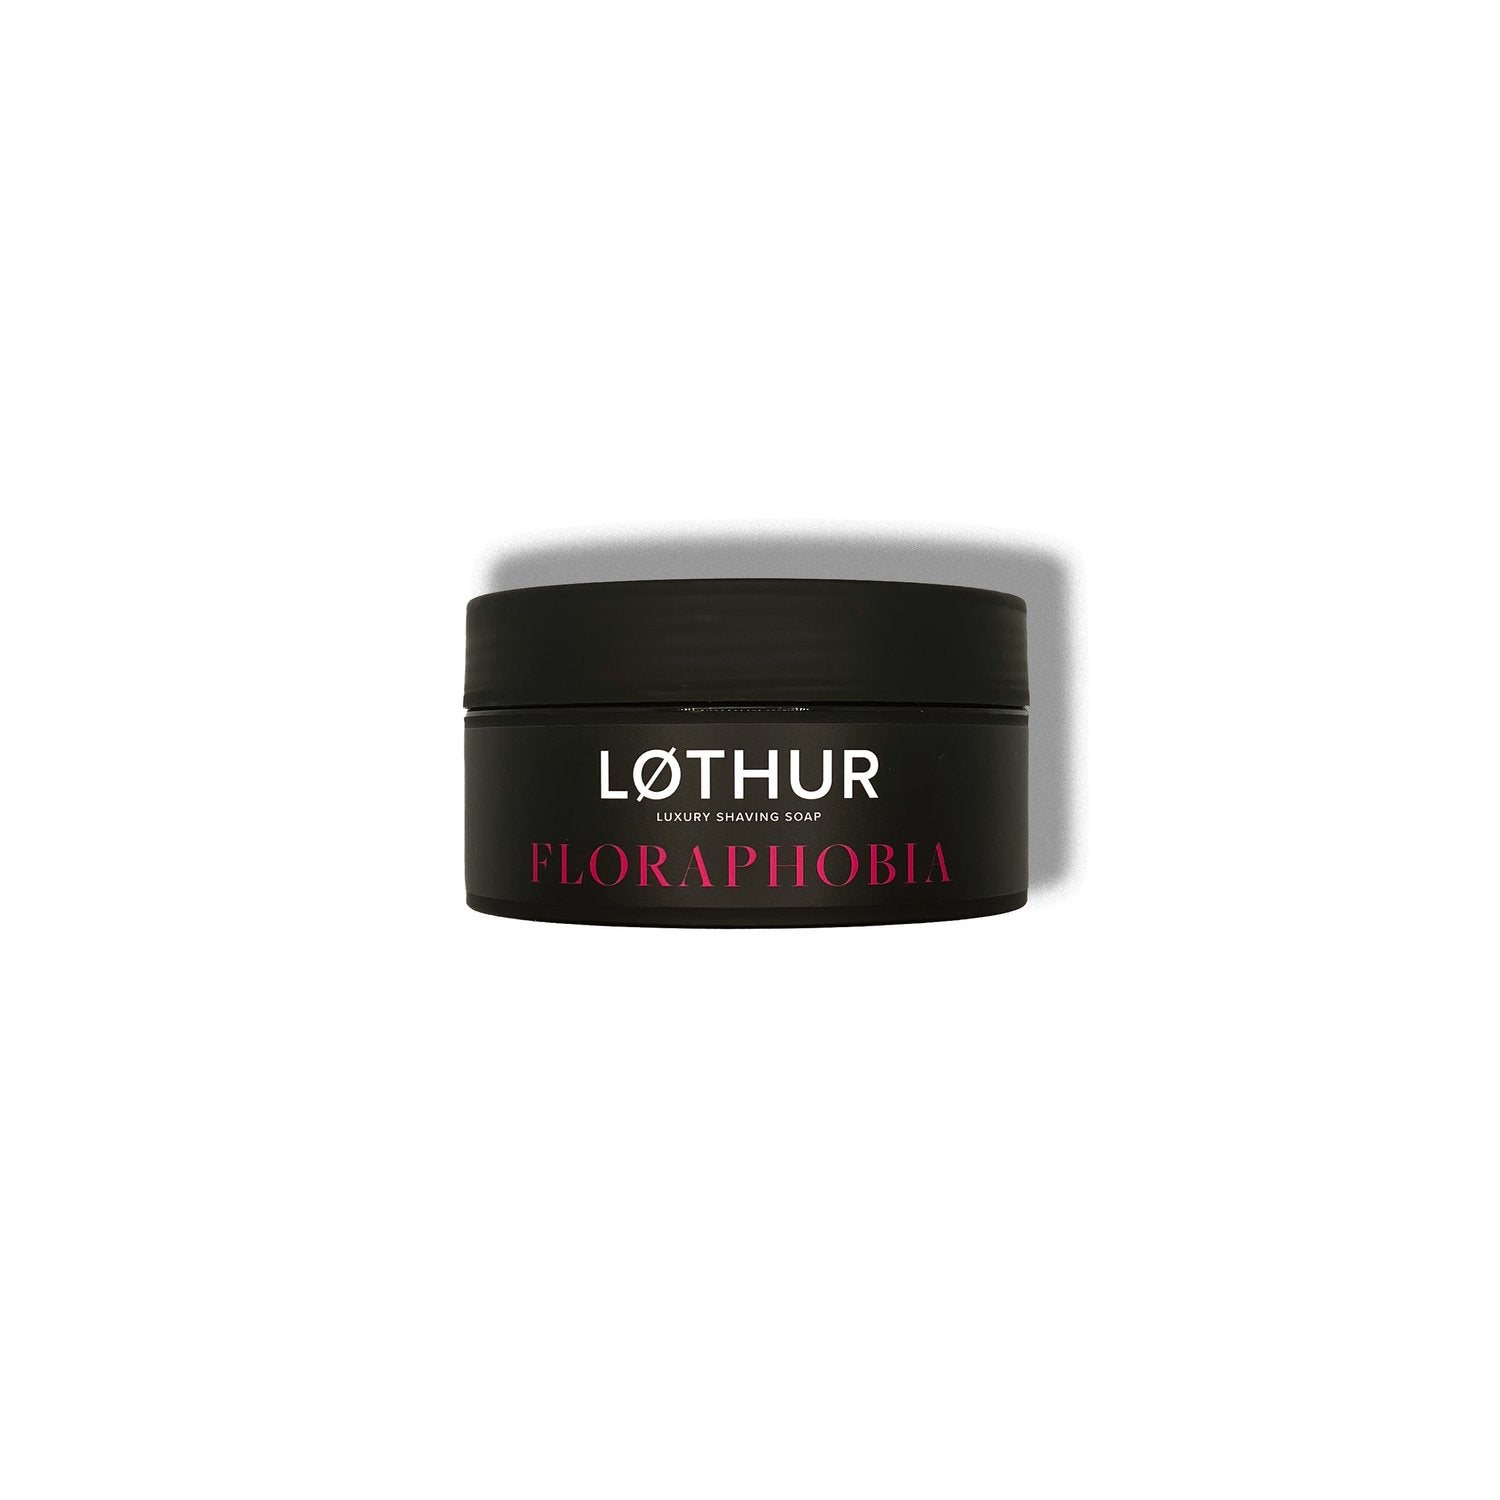 Lothur Floraphobia Shaving Soap 115g